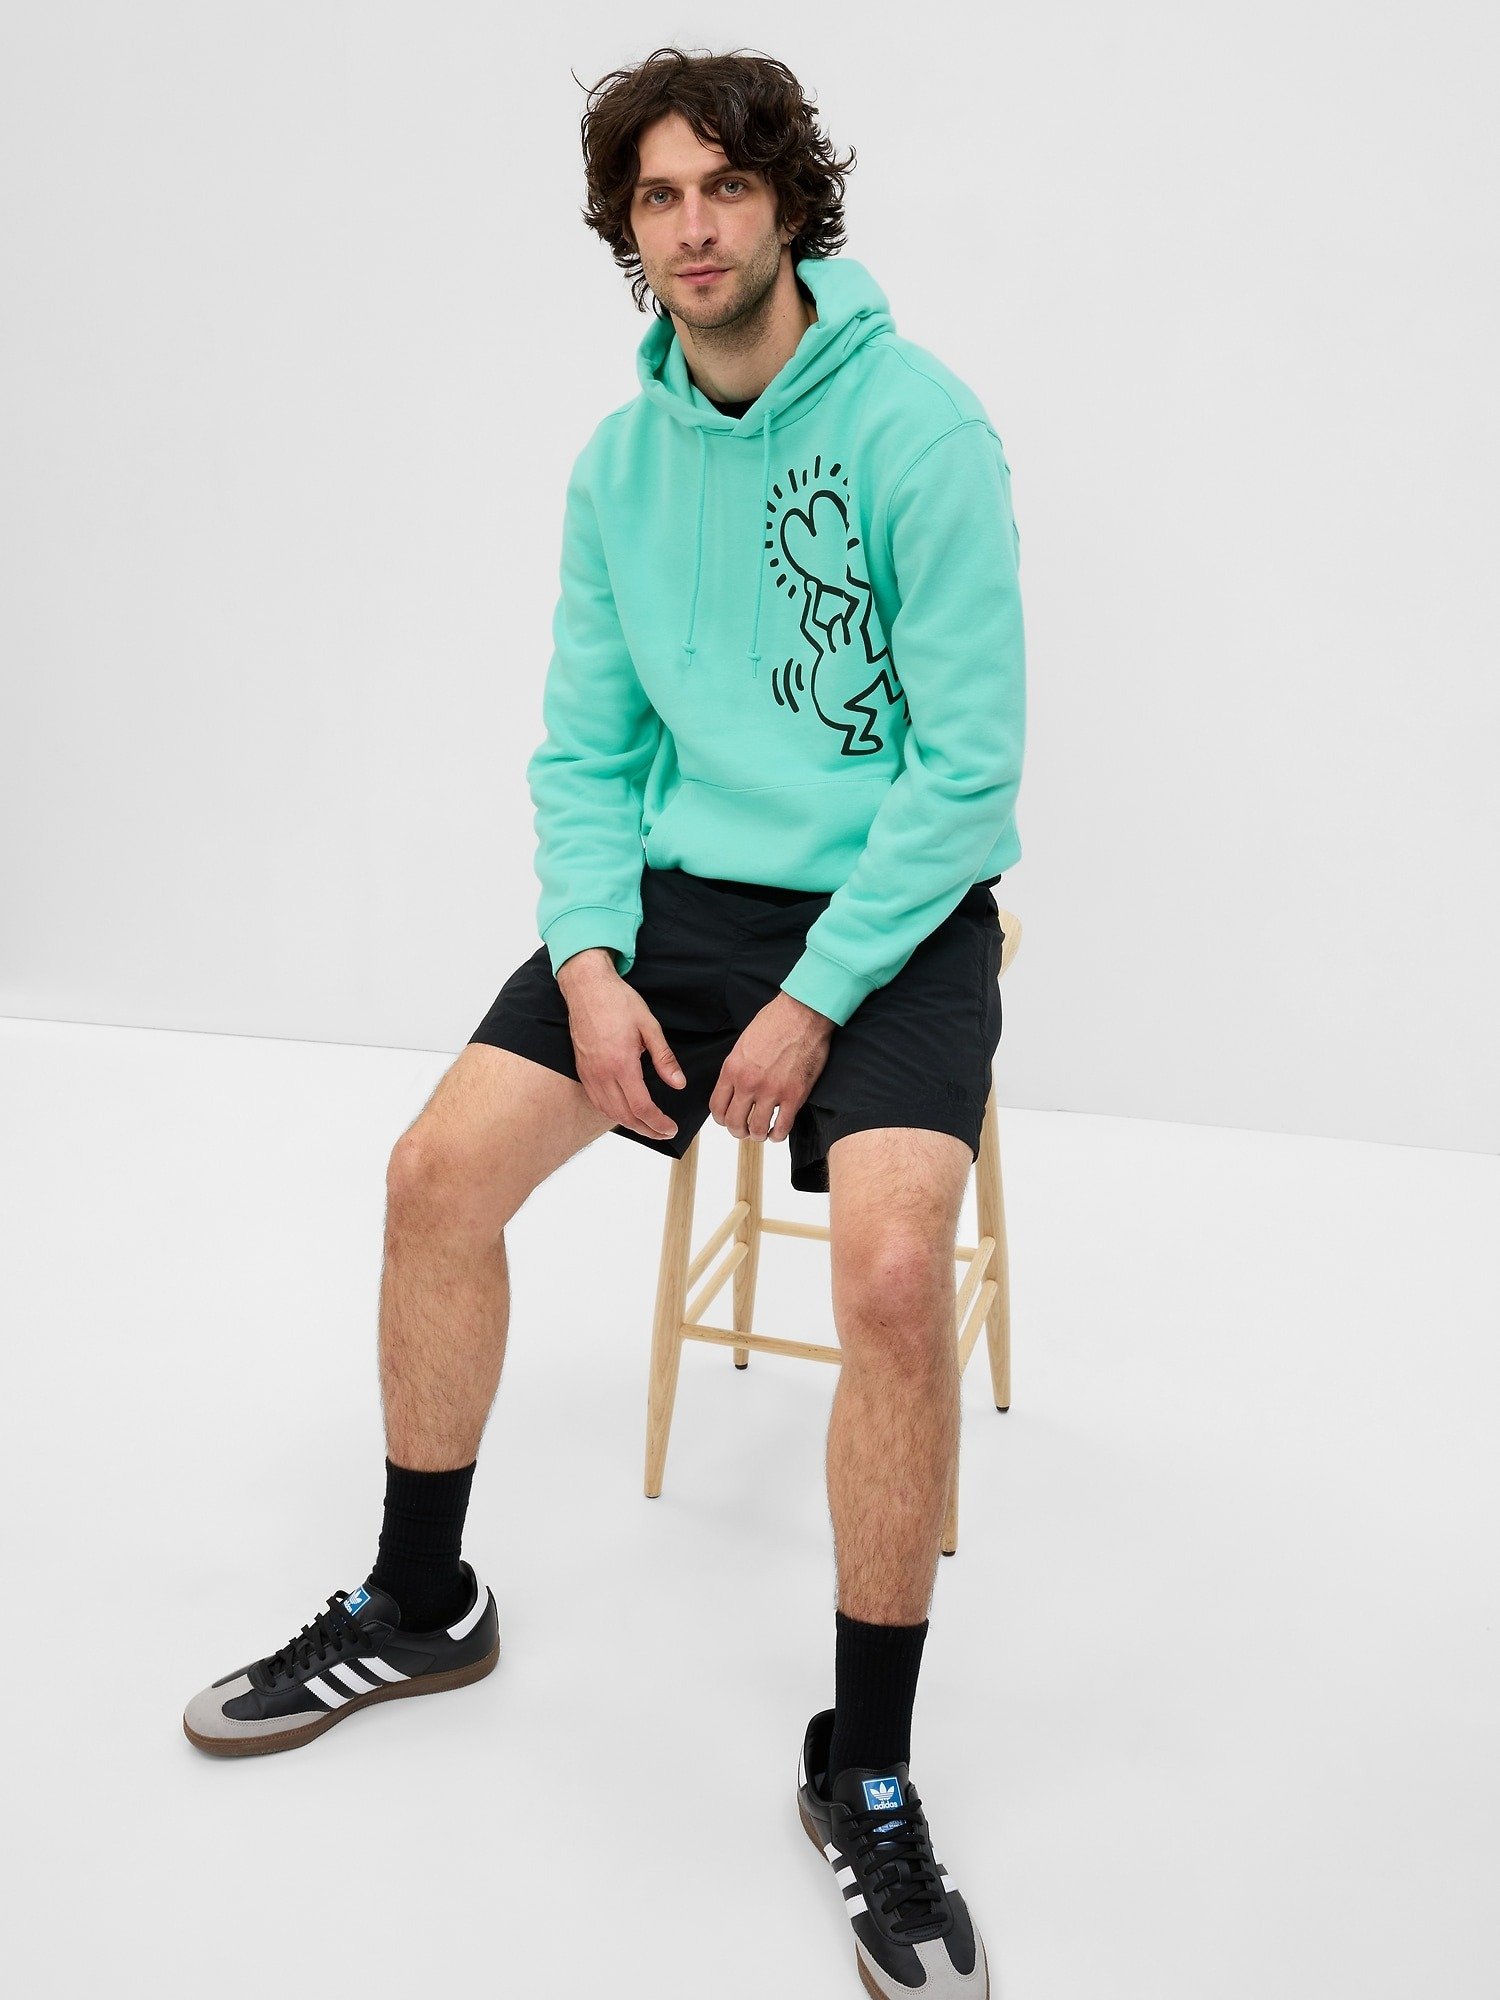 Gap × Keith Haring Grafikli Sweatshirt product image